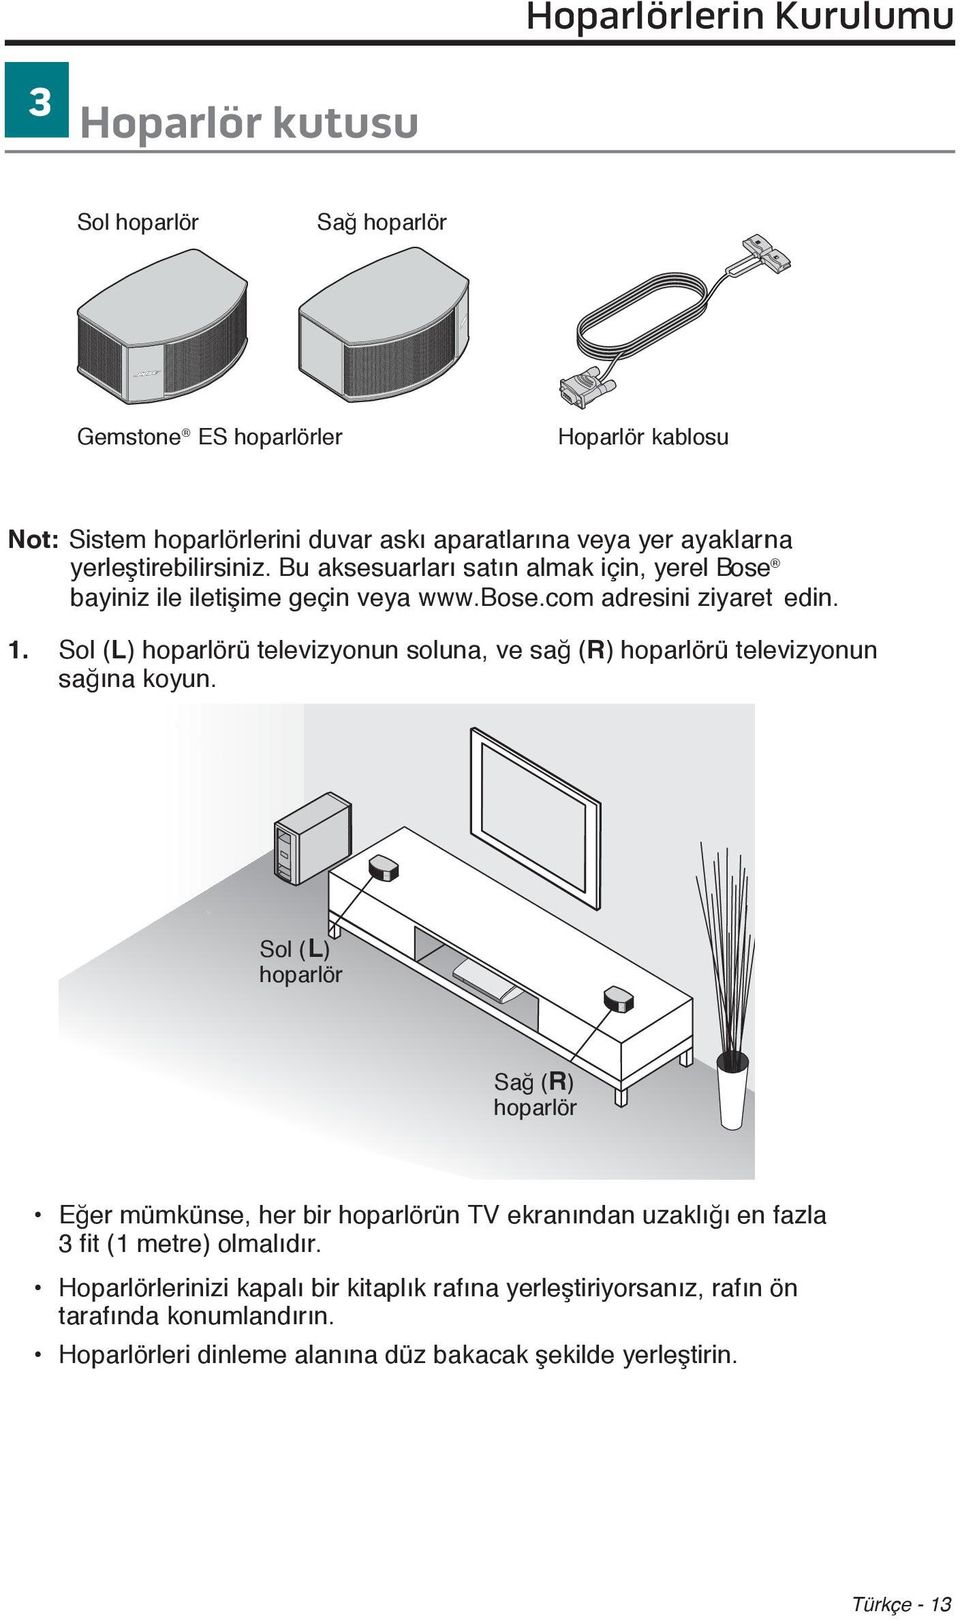 Sol (L) hoparlörü televizyonun soluna, ve sağ (R) hoparlörü televizyonun sağına koyun.